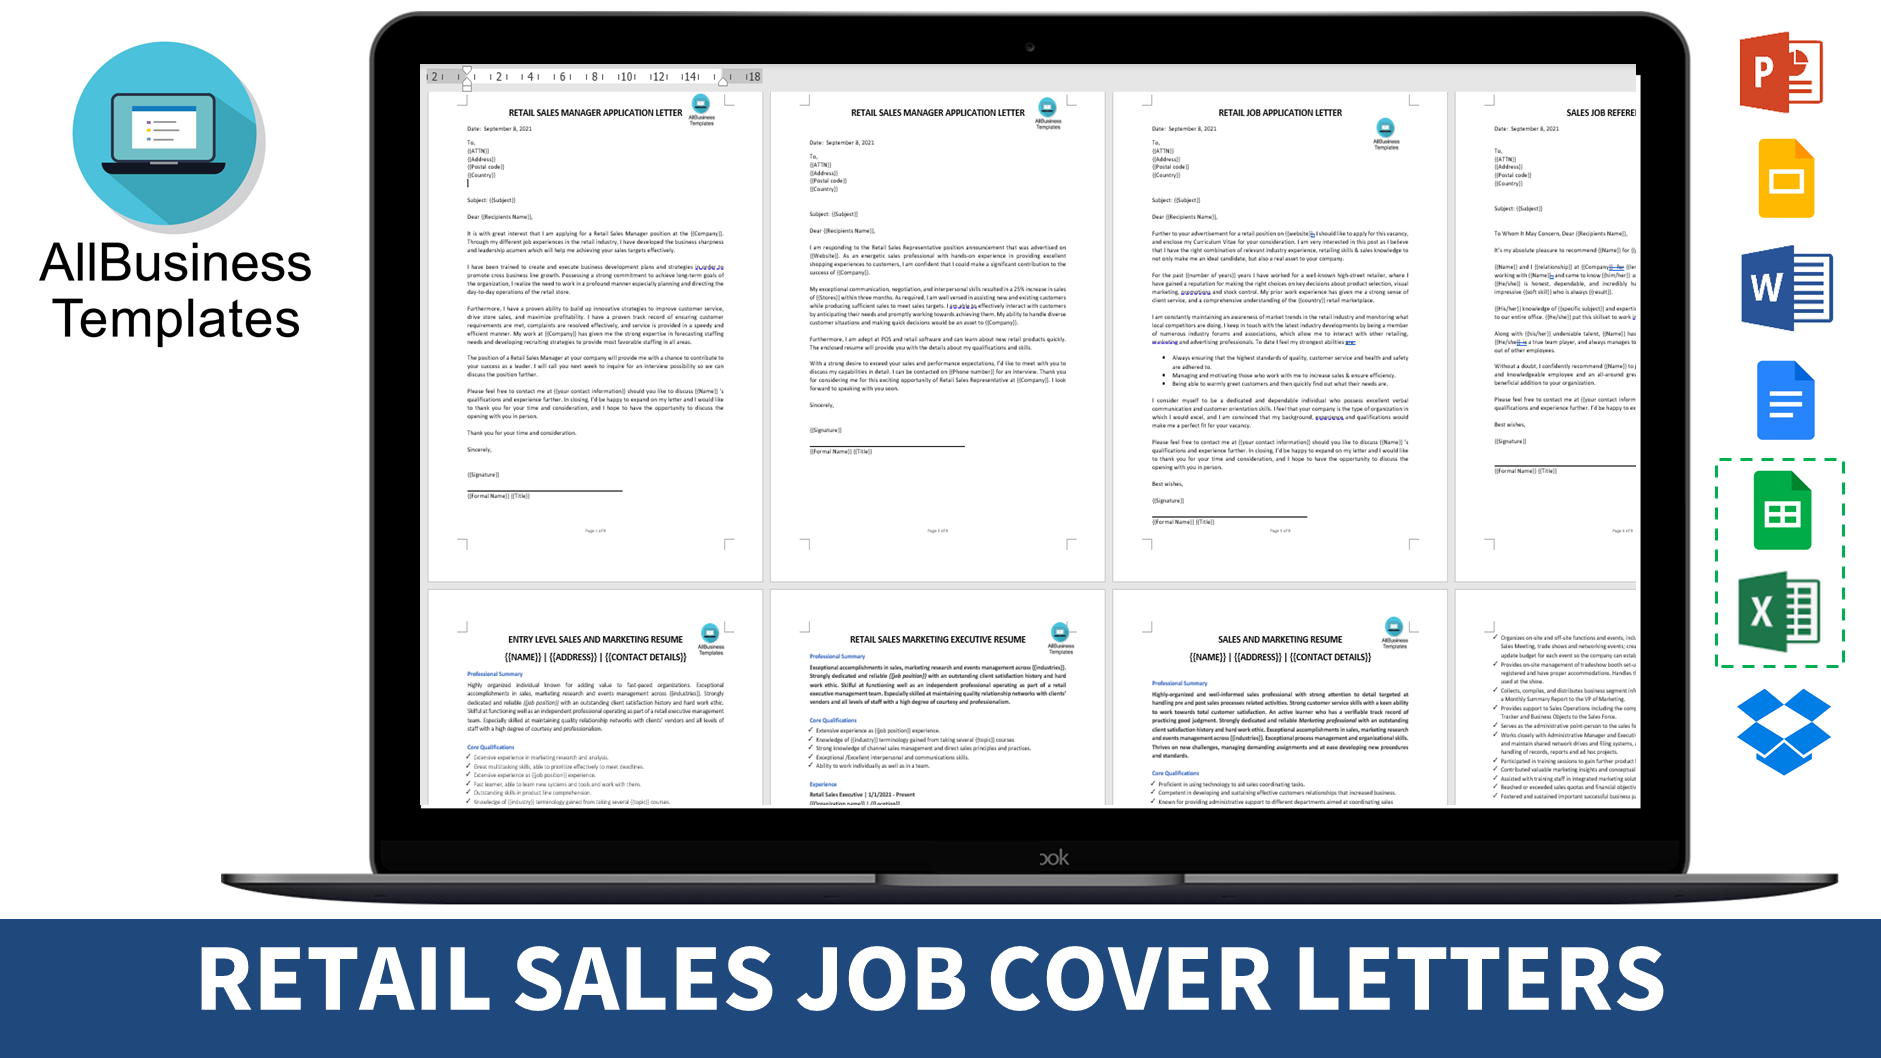 Retail Sales Associate Cover Letter Templates At Allbusinesstemplates Com